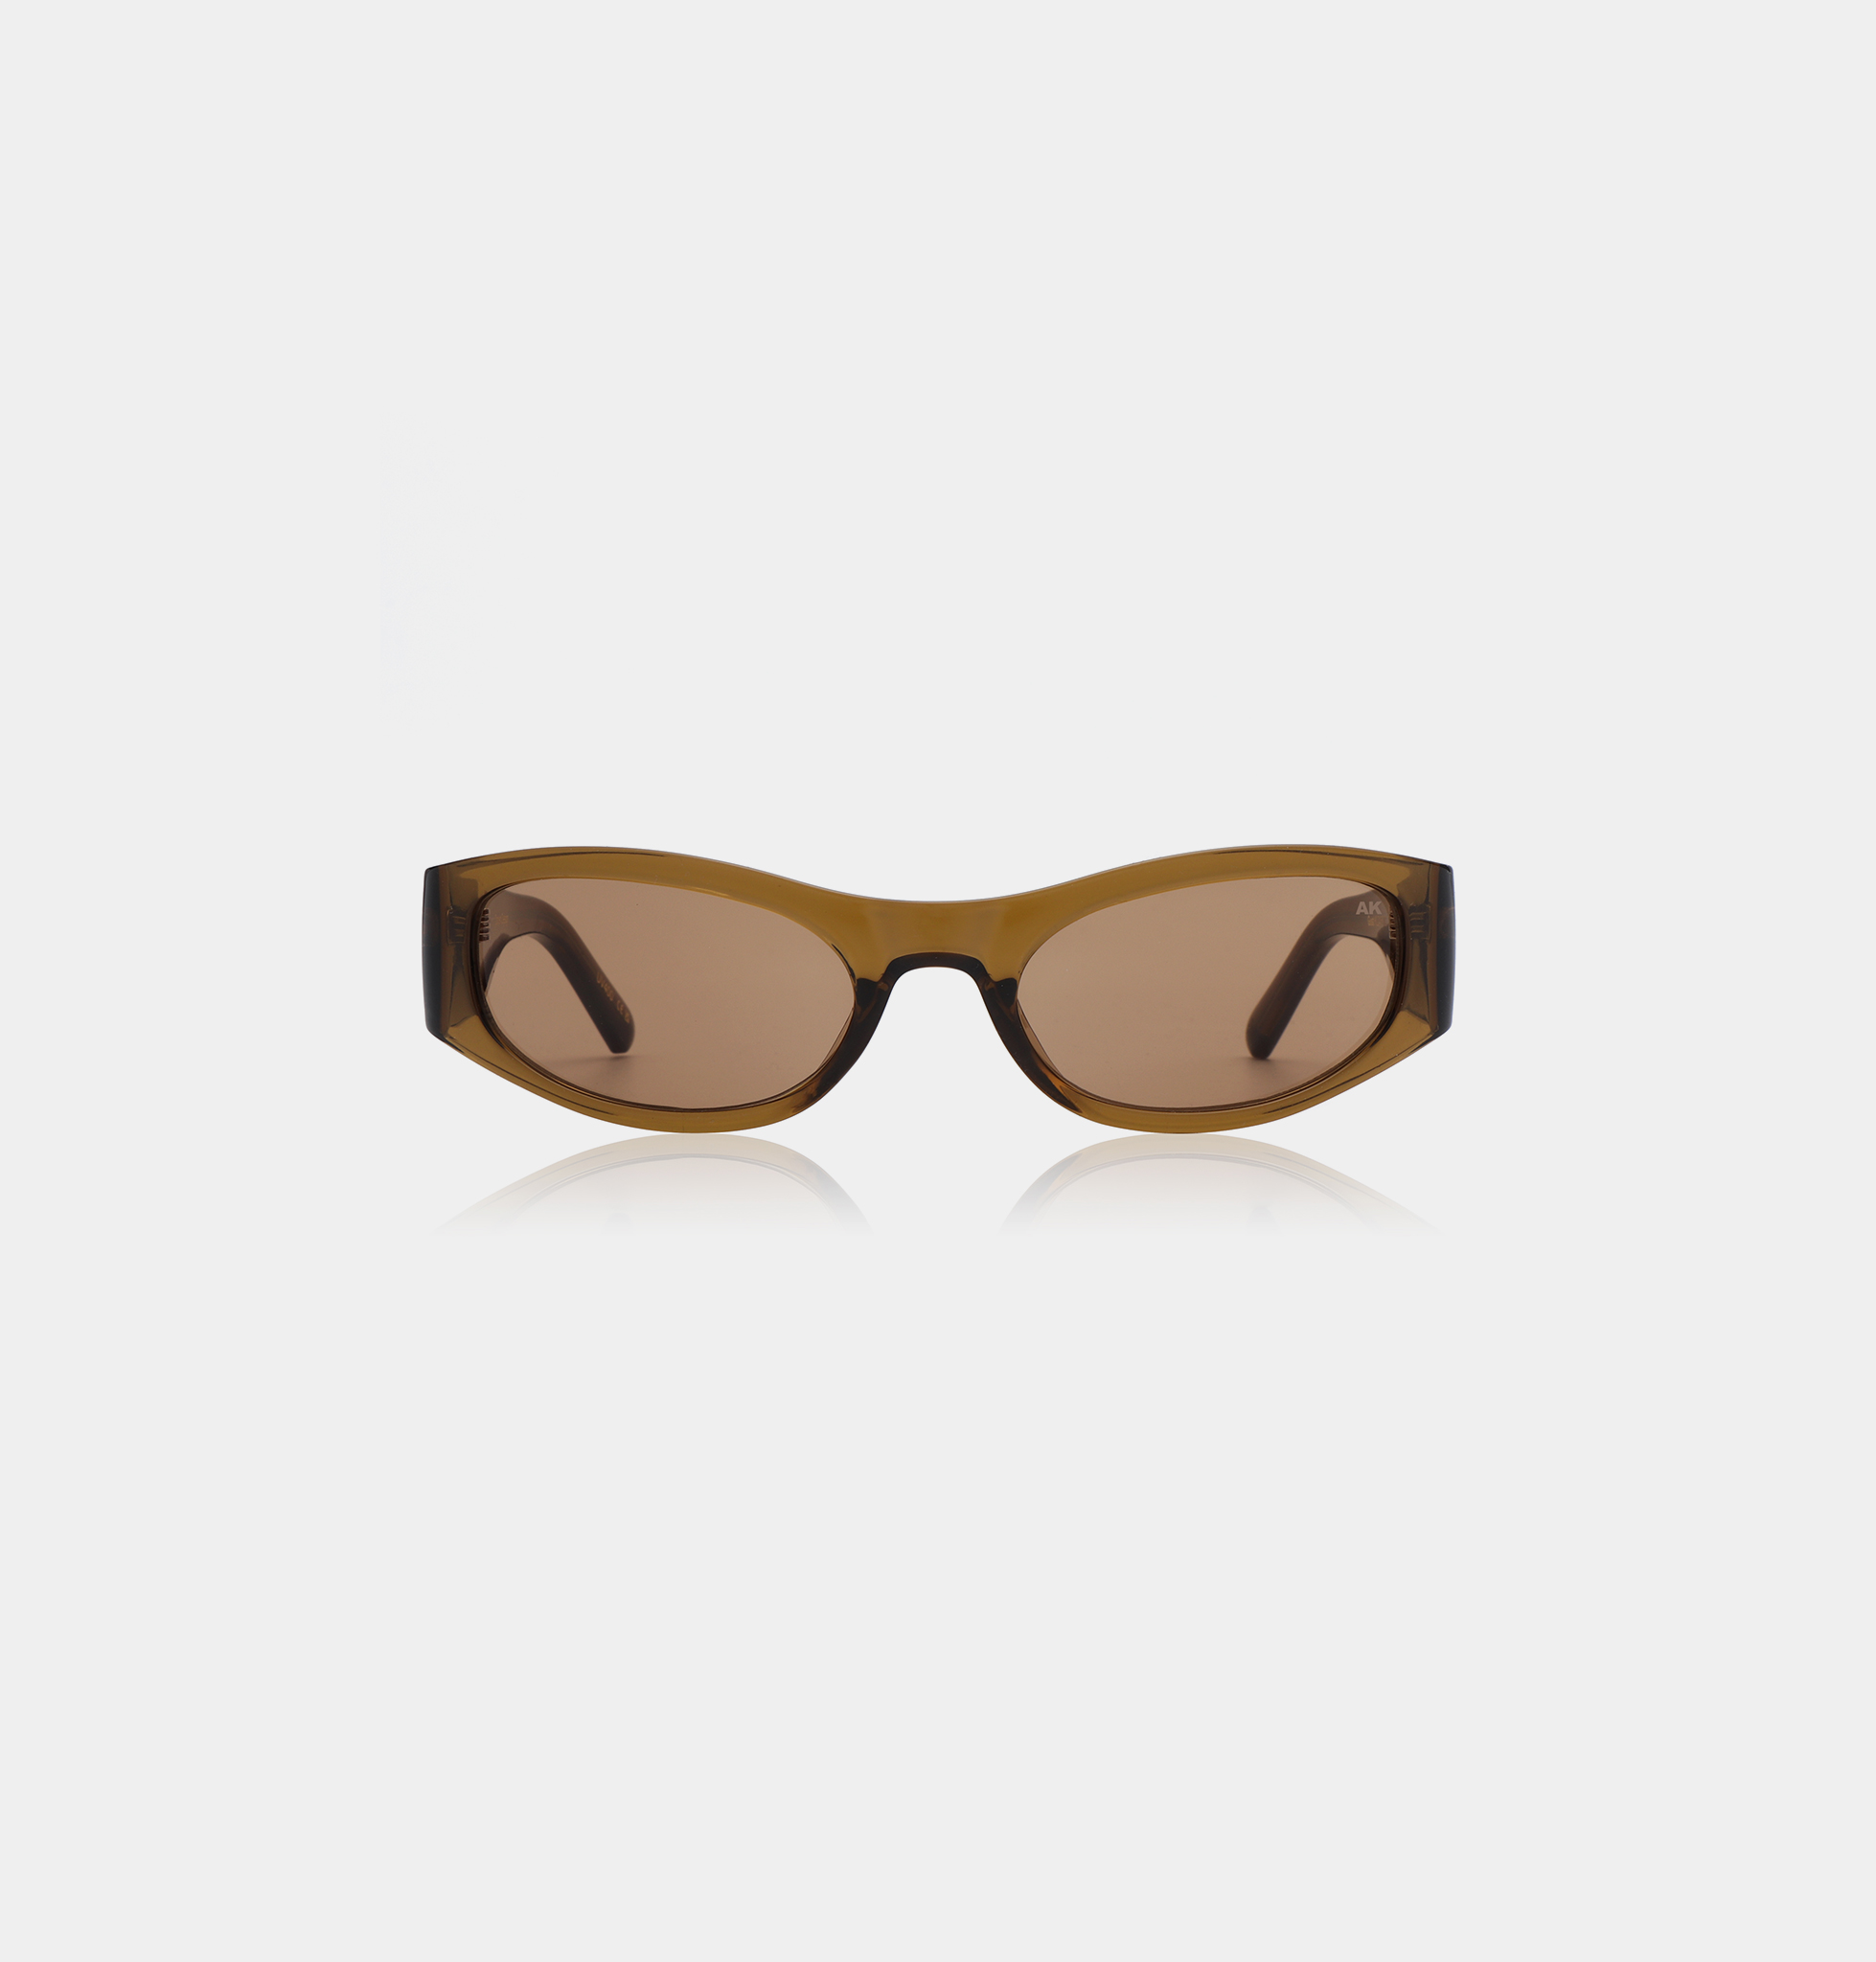 A.Kjaerbede zonnebril model GUST kleur BRUIN met BRONZE glazen AKsunnies bril sunglasses eyewear